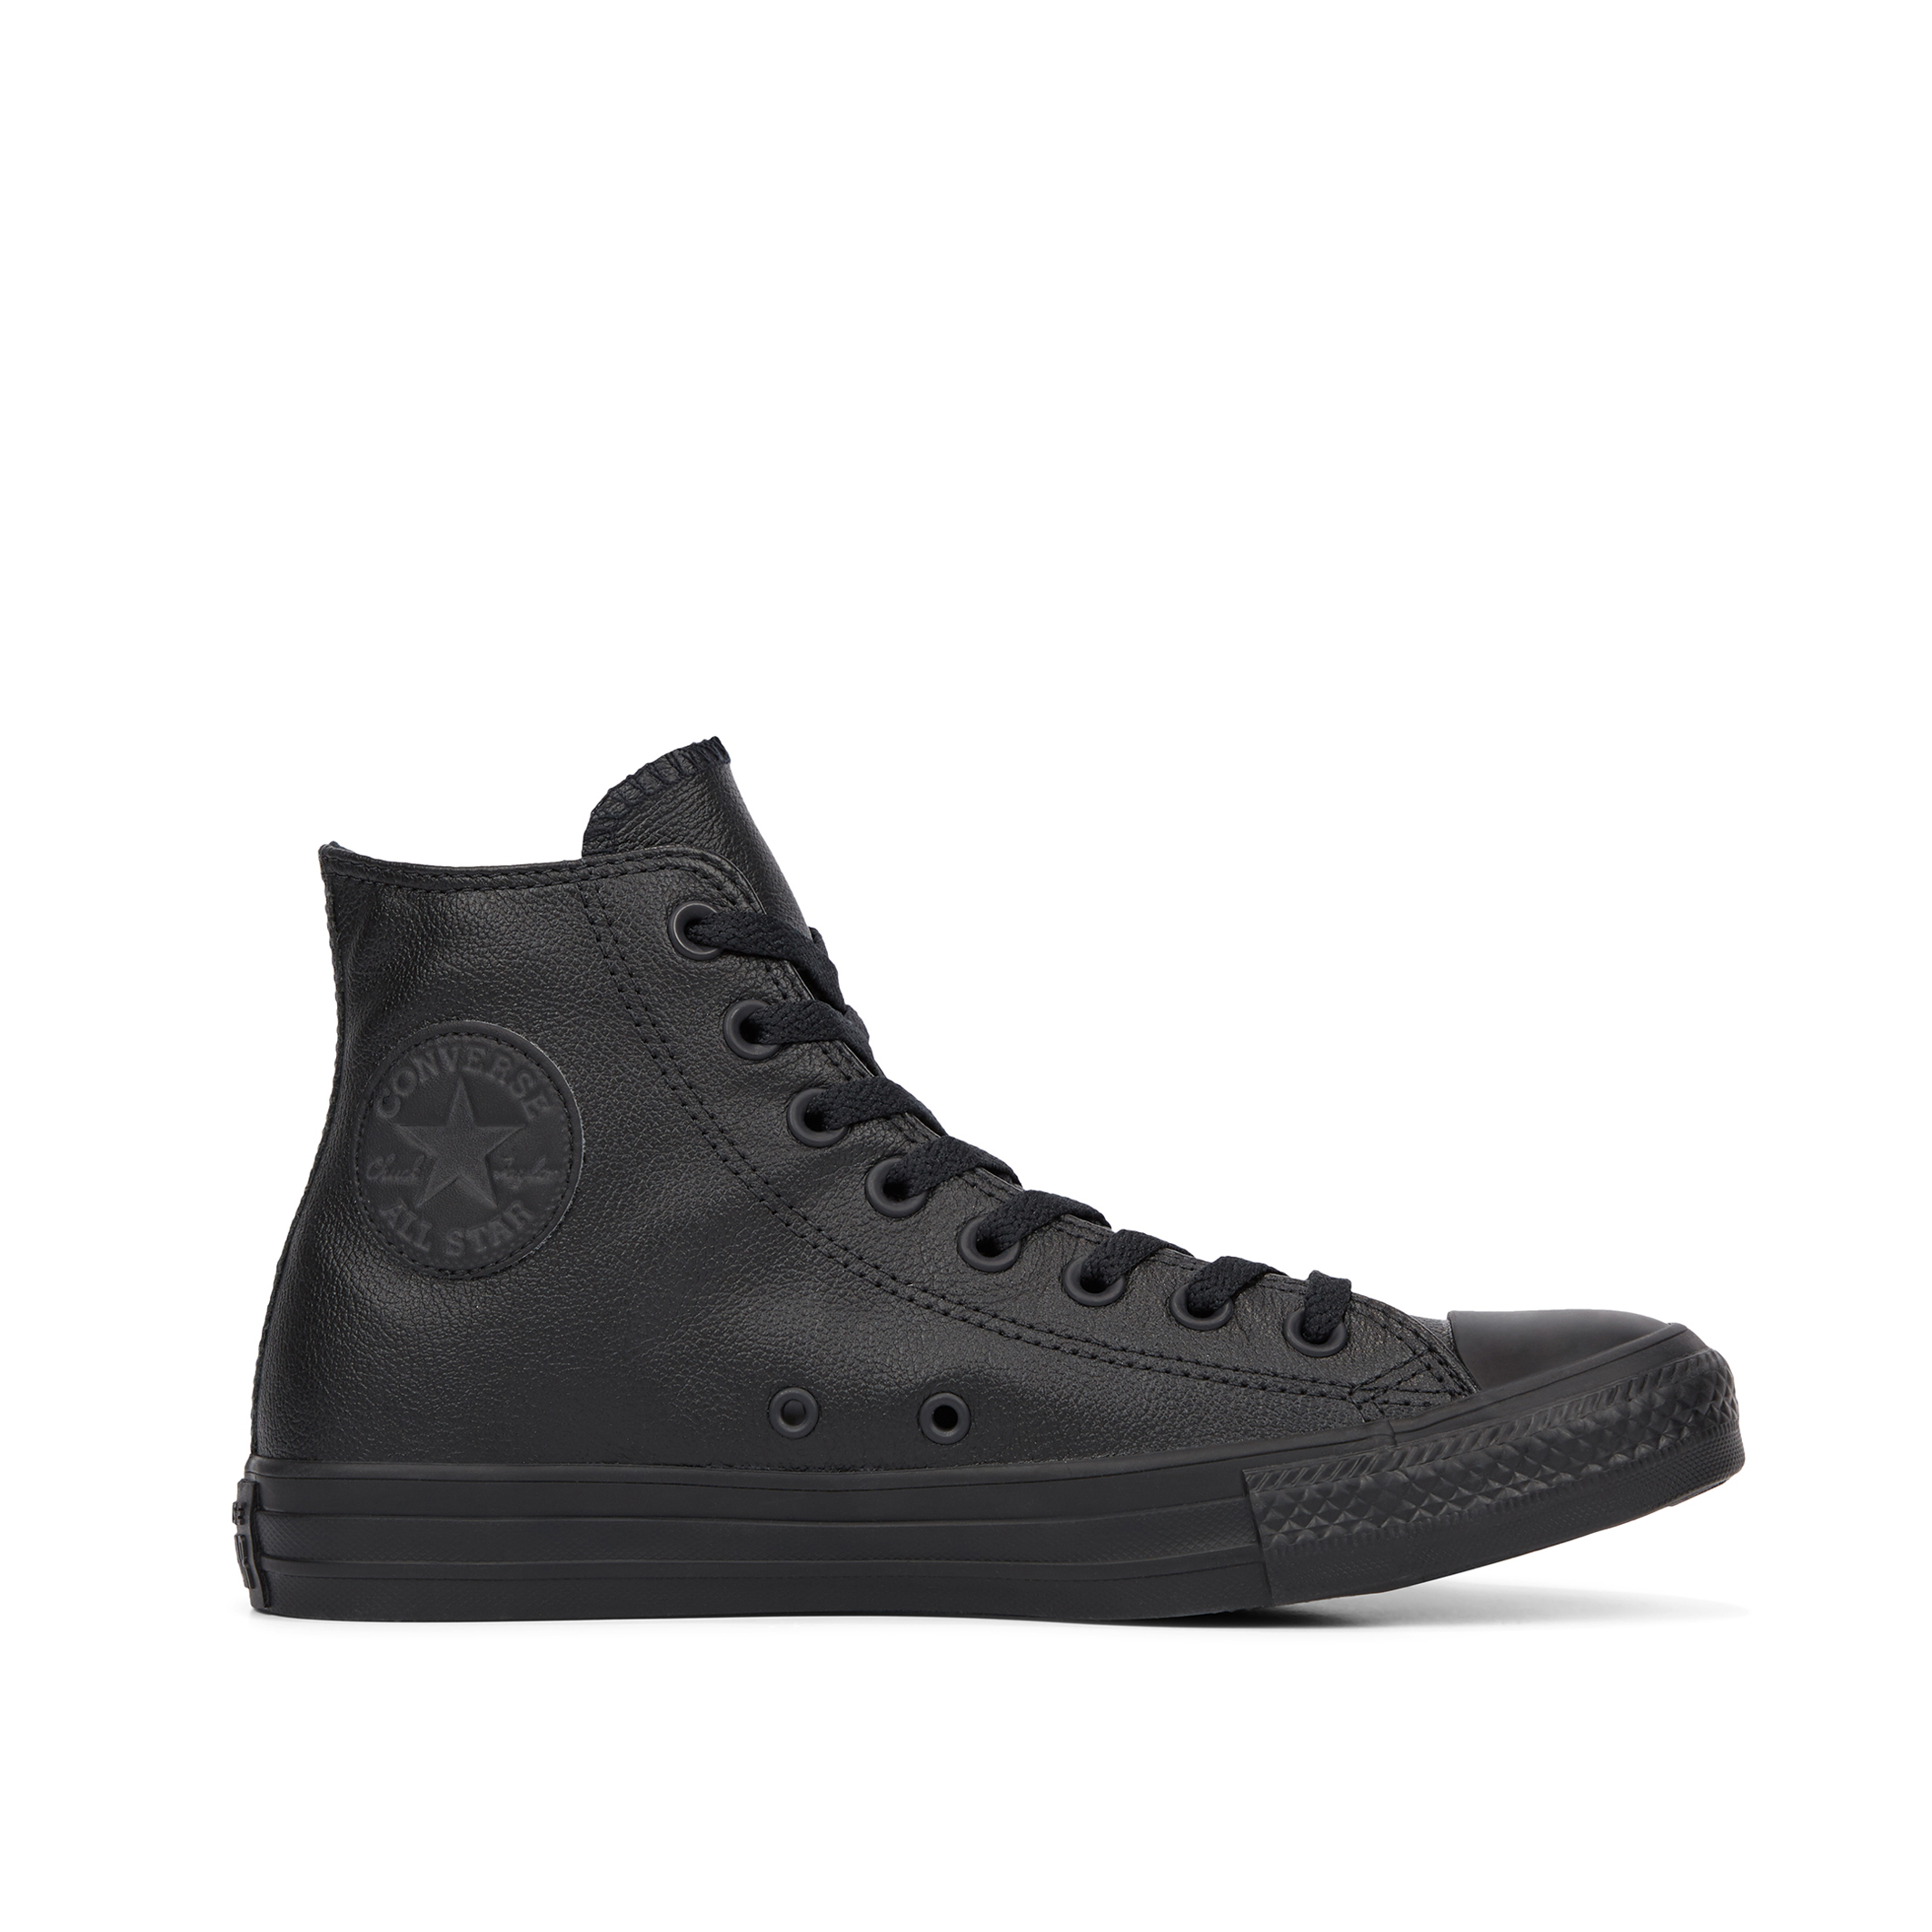 Chuck taylor mono leather hi high top trainers, black, Converse | La Redoute